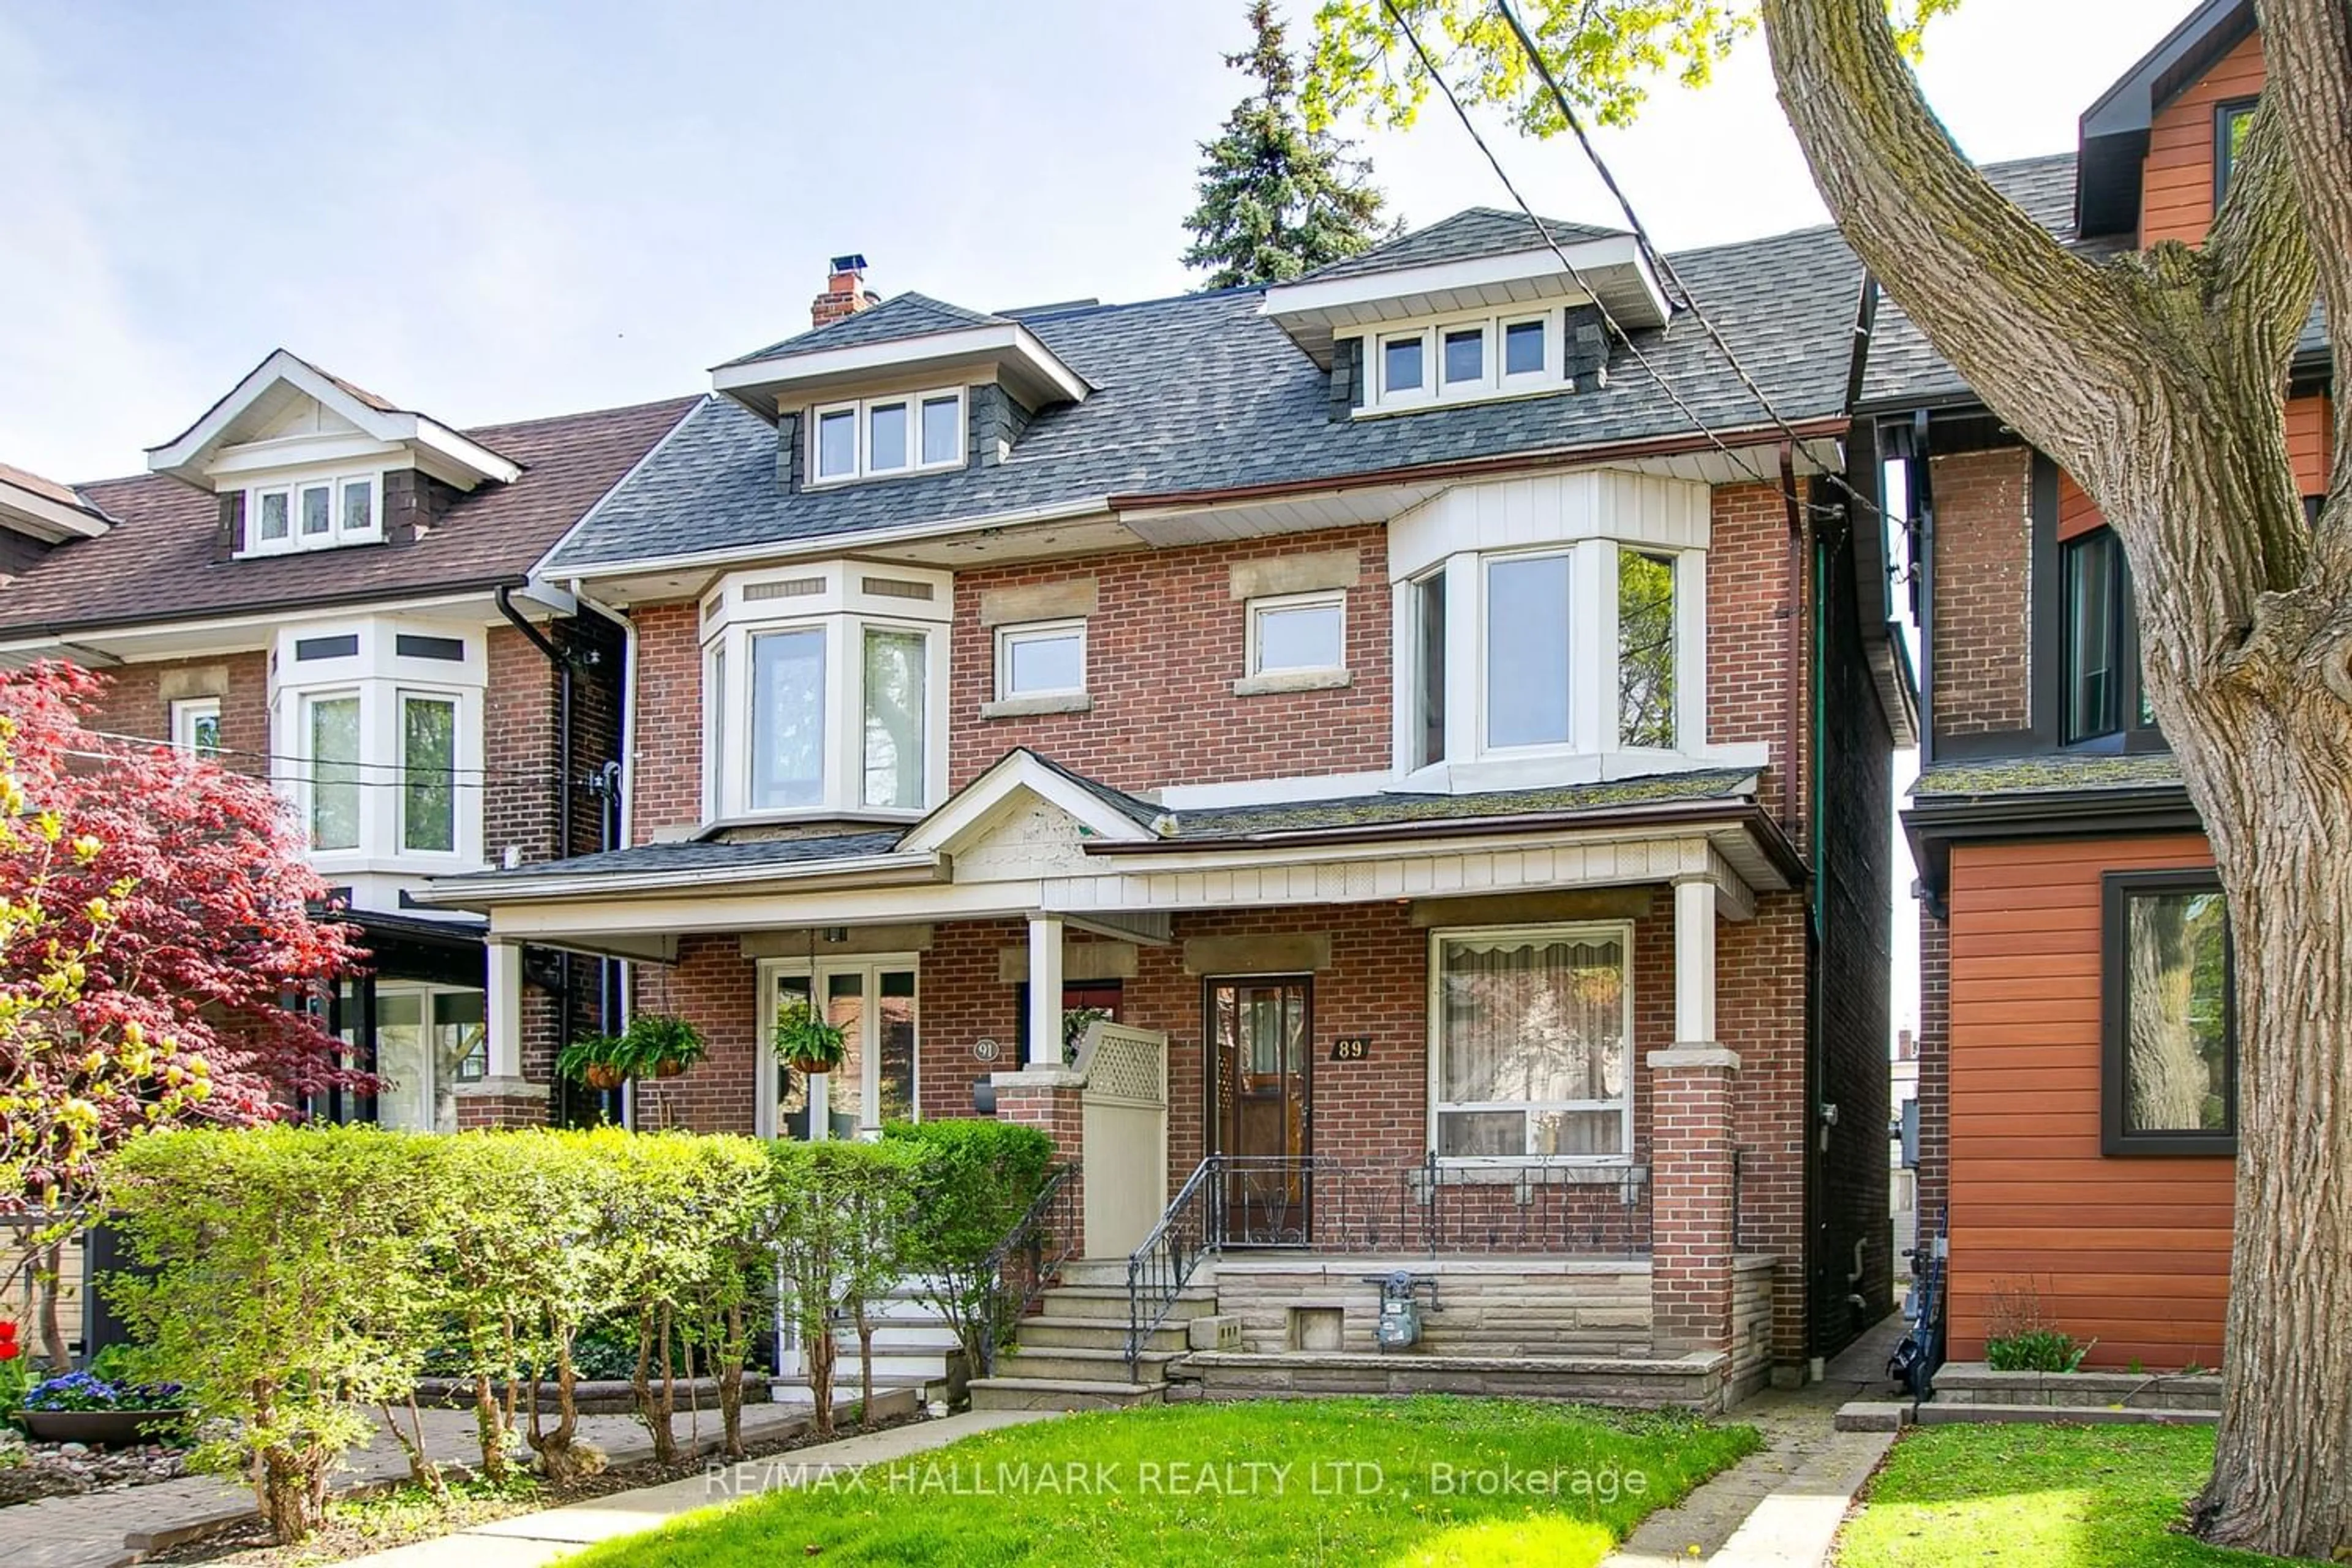 Home with brick exterior material for 89 Langford Ave, Toronto Ontario M4J 3E5